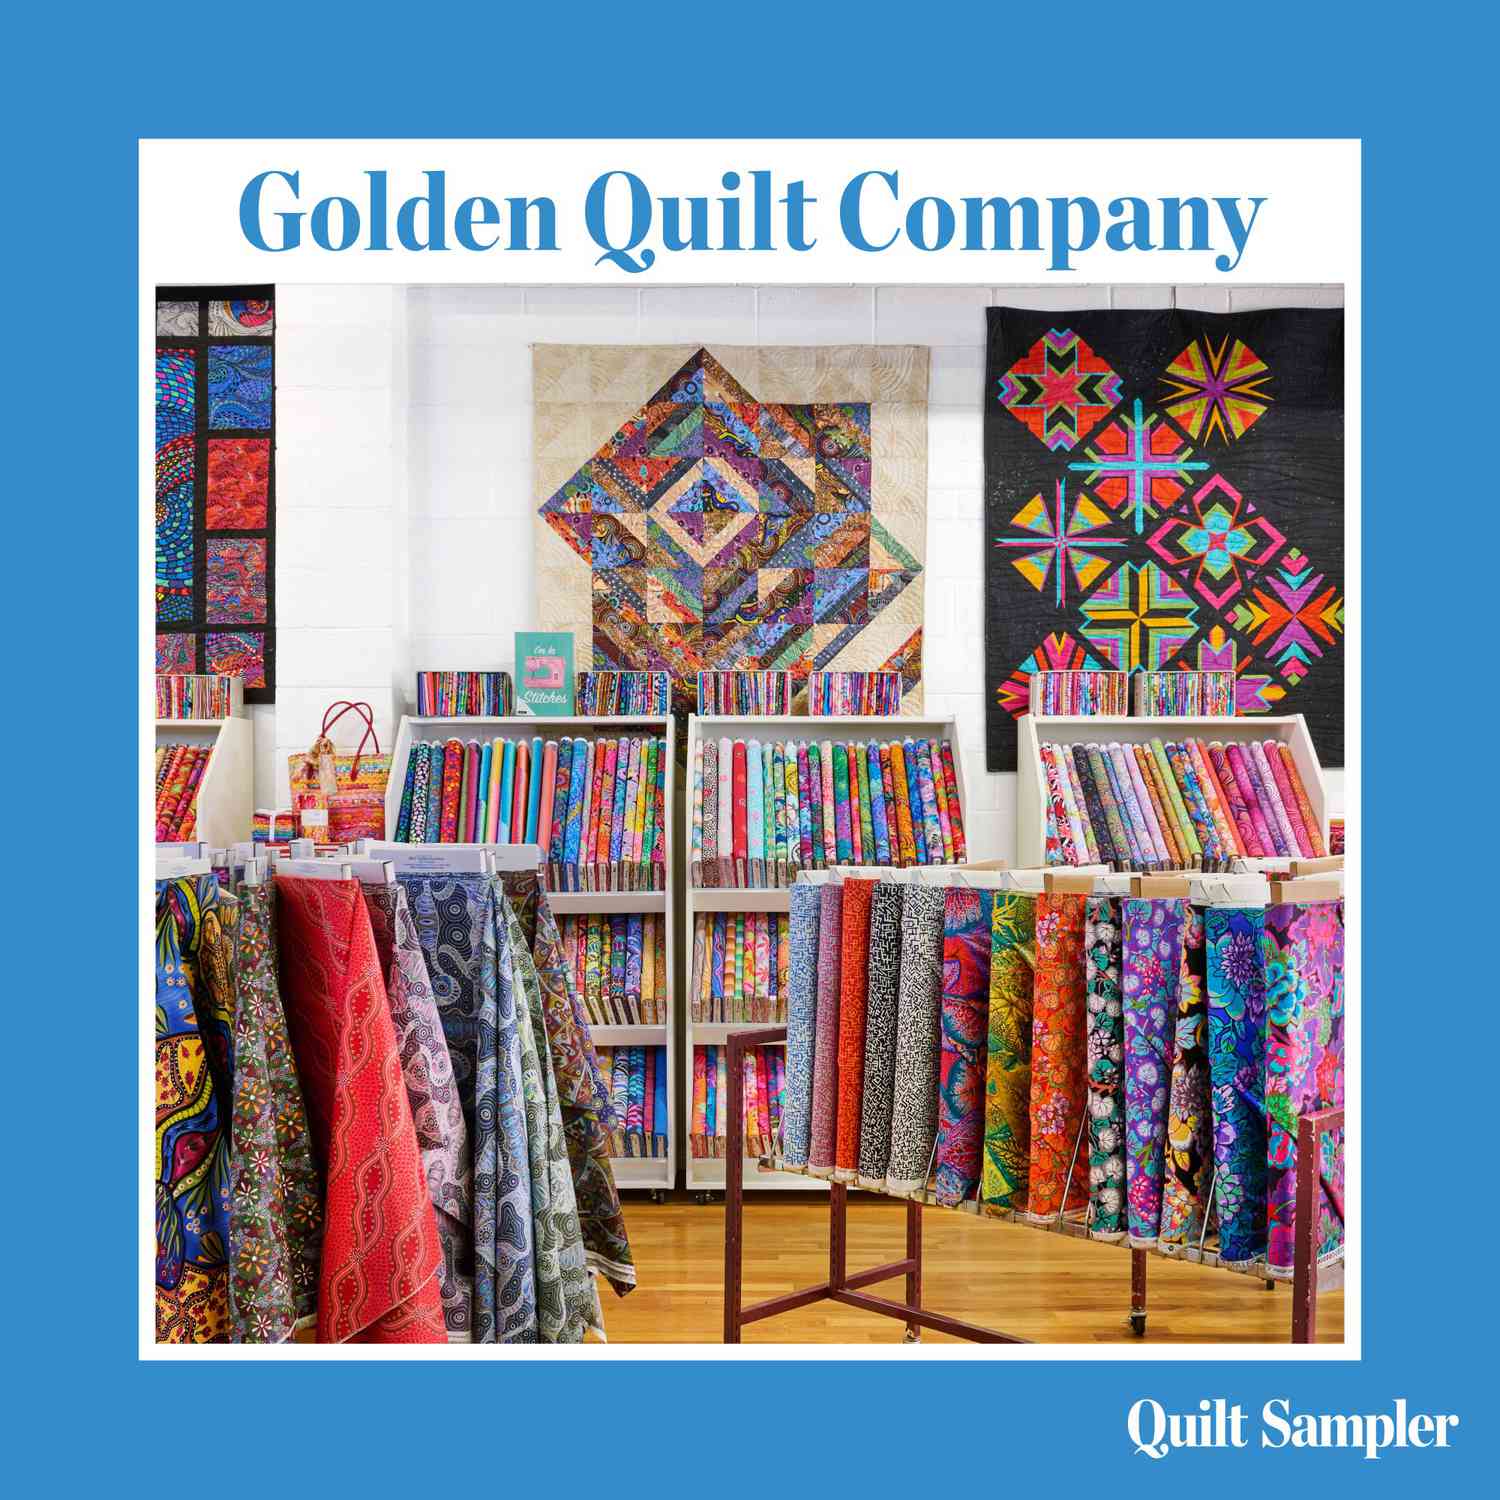 Golden Quilt Company